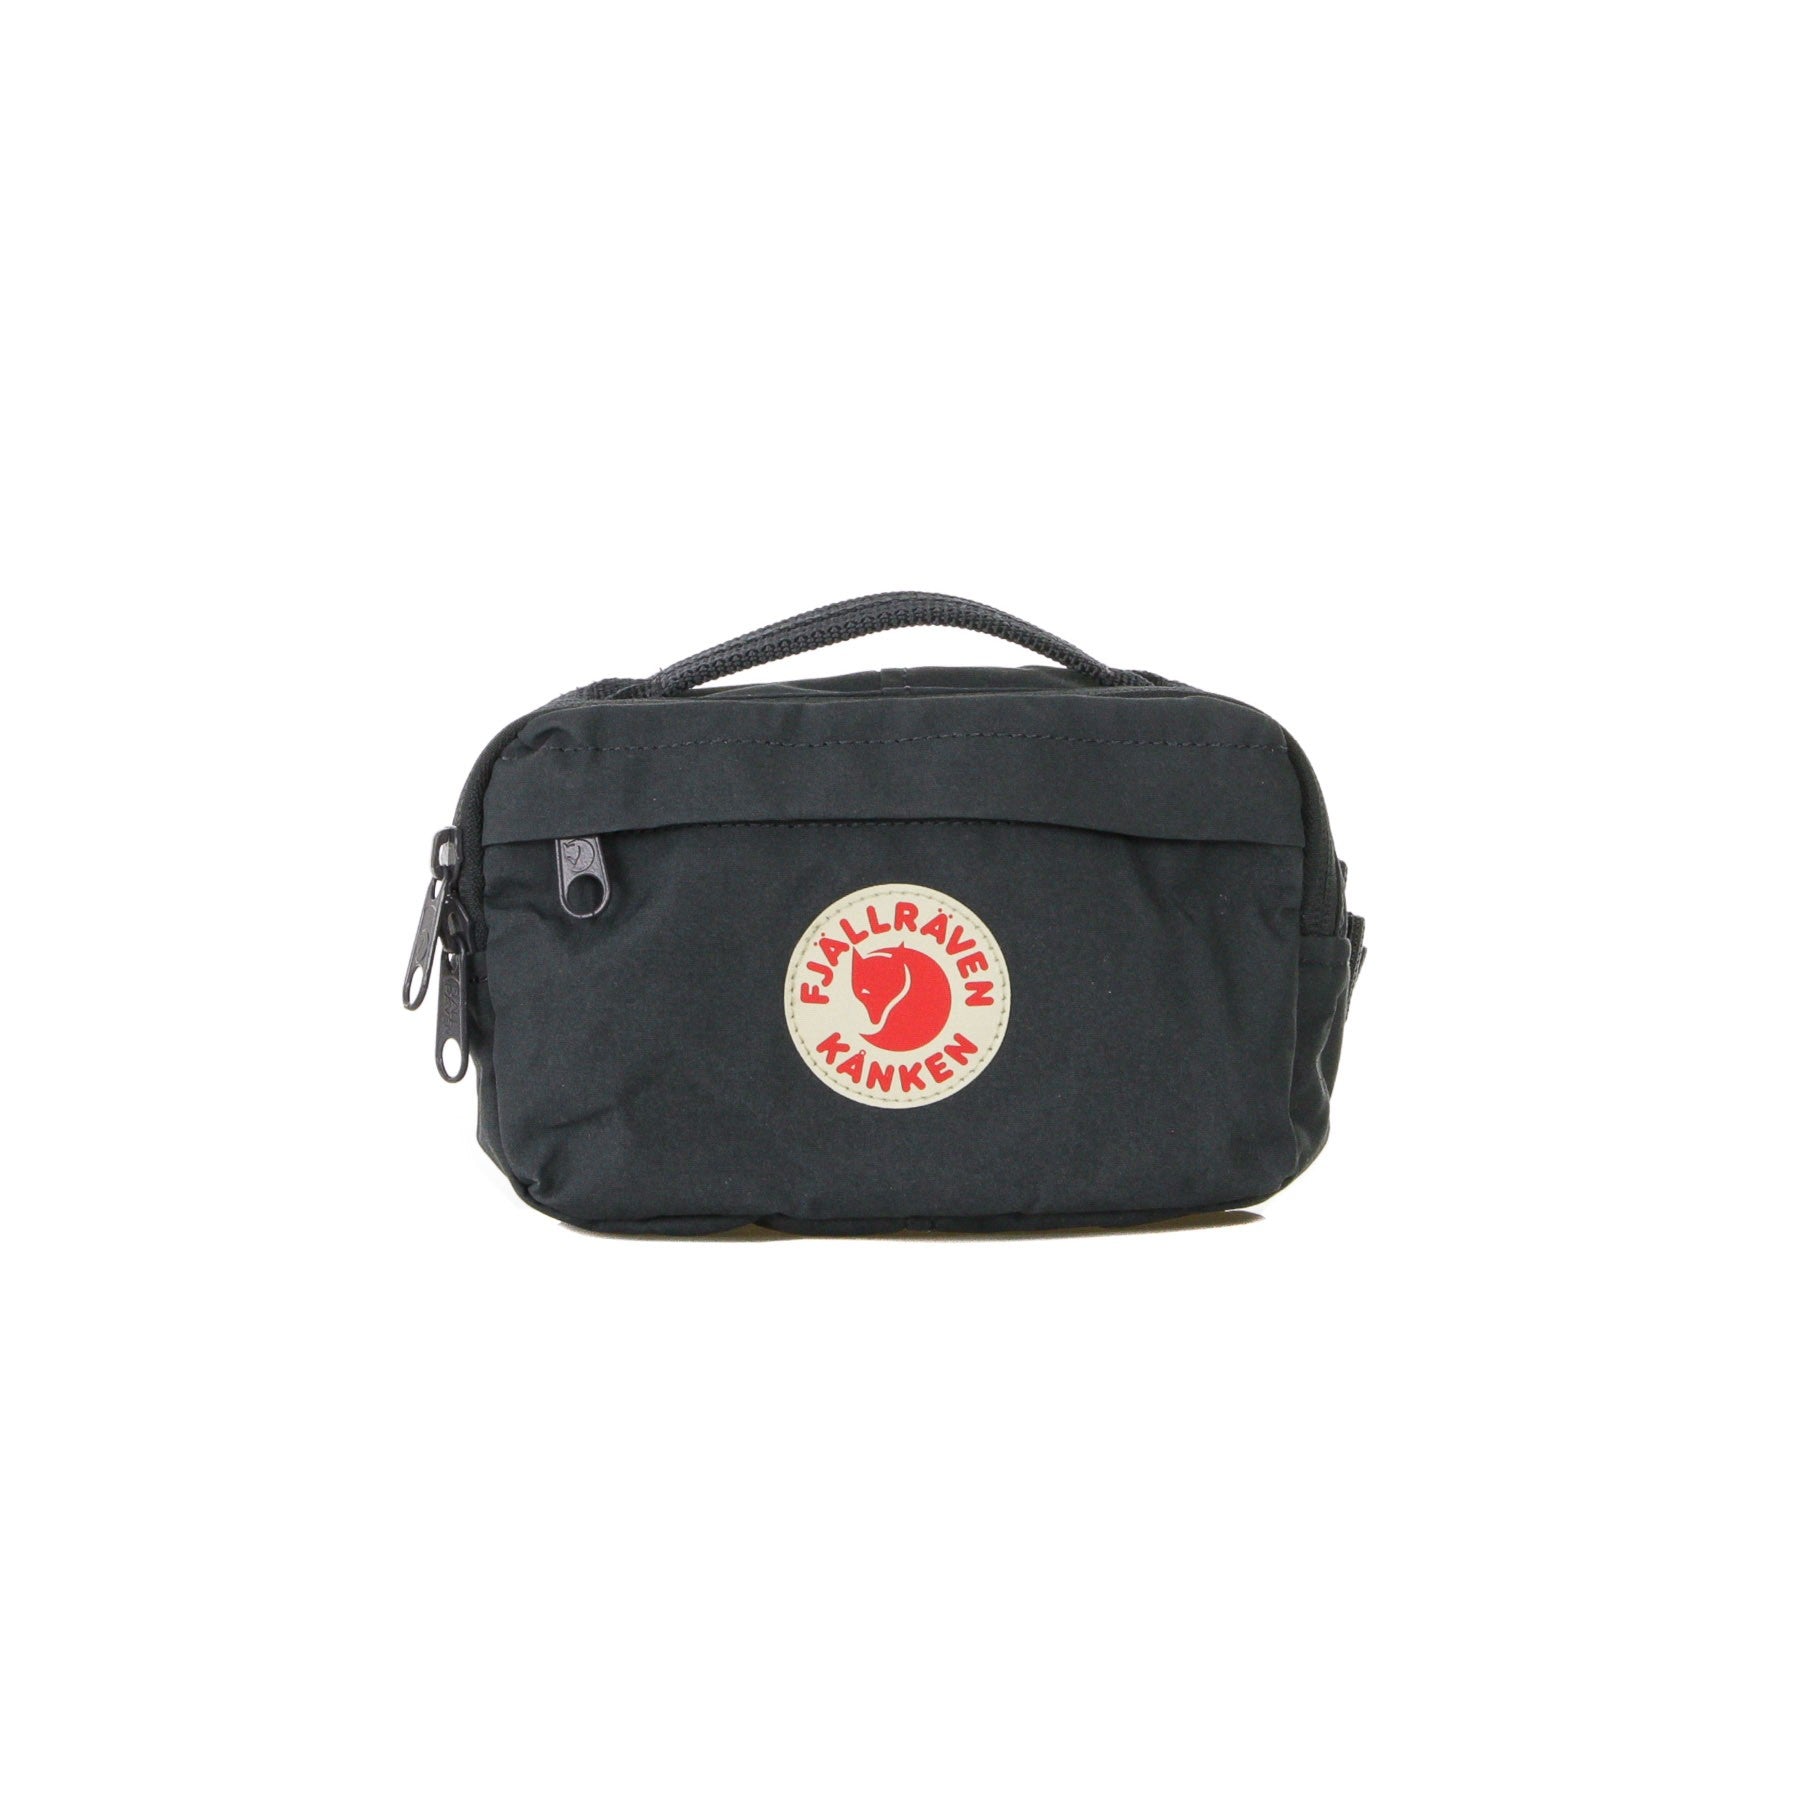 Kanken Hip Pack Navy Unisex Bum Bag